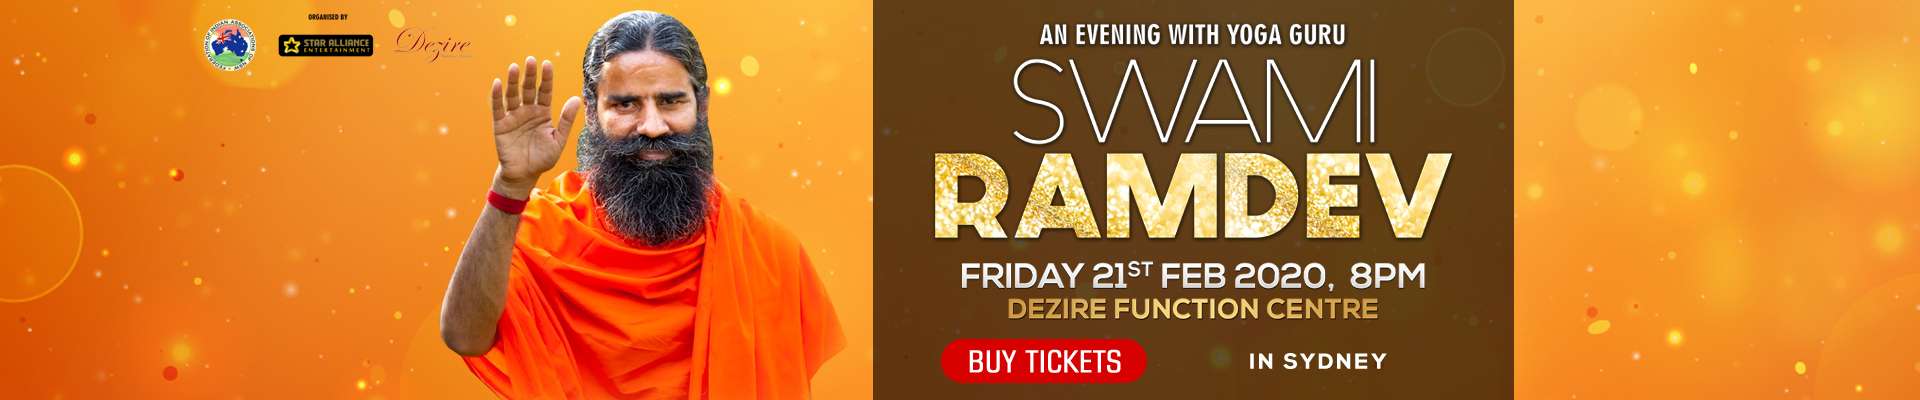 An Evening with Yoga Guru Swami Ramdev